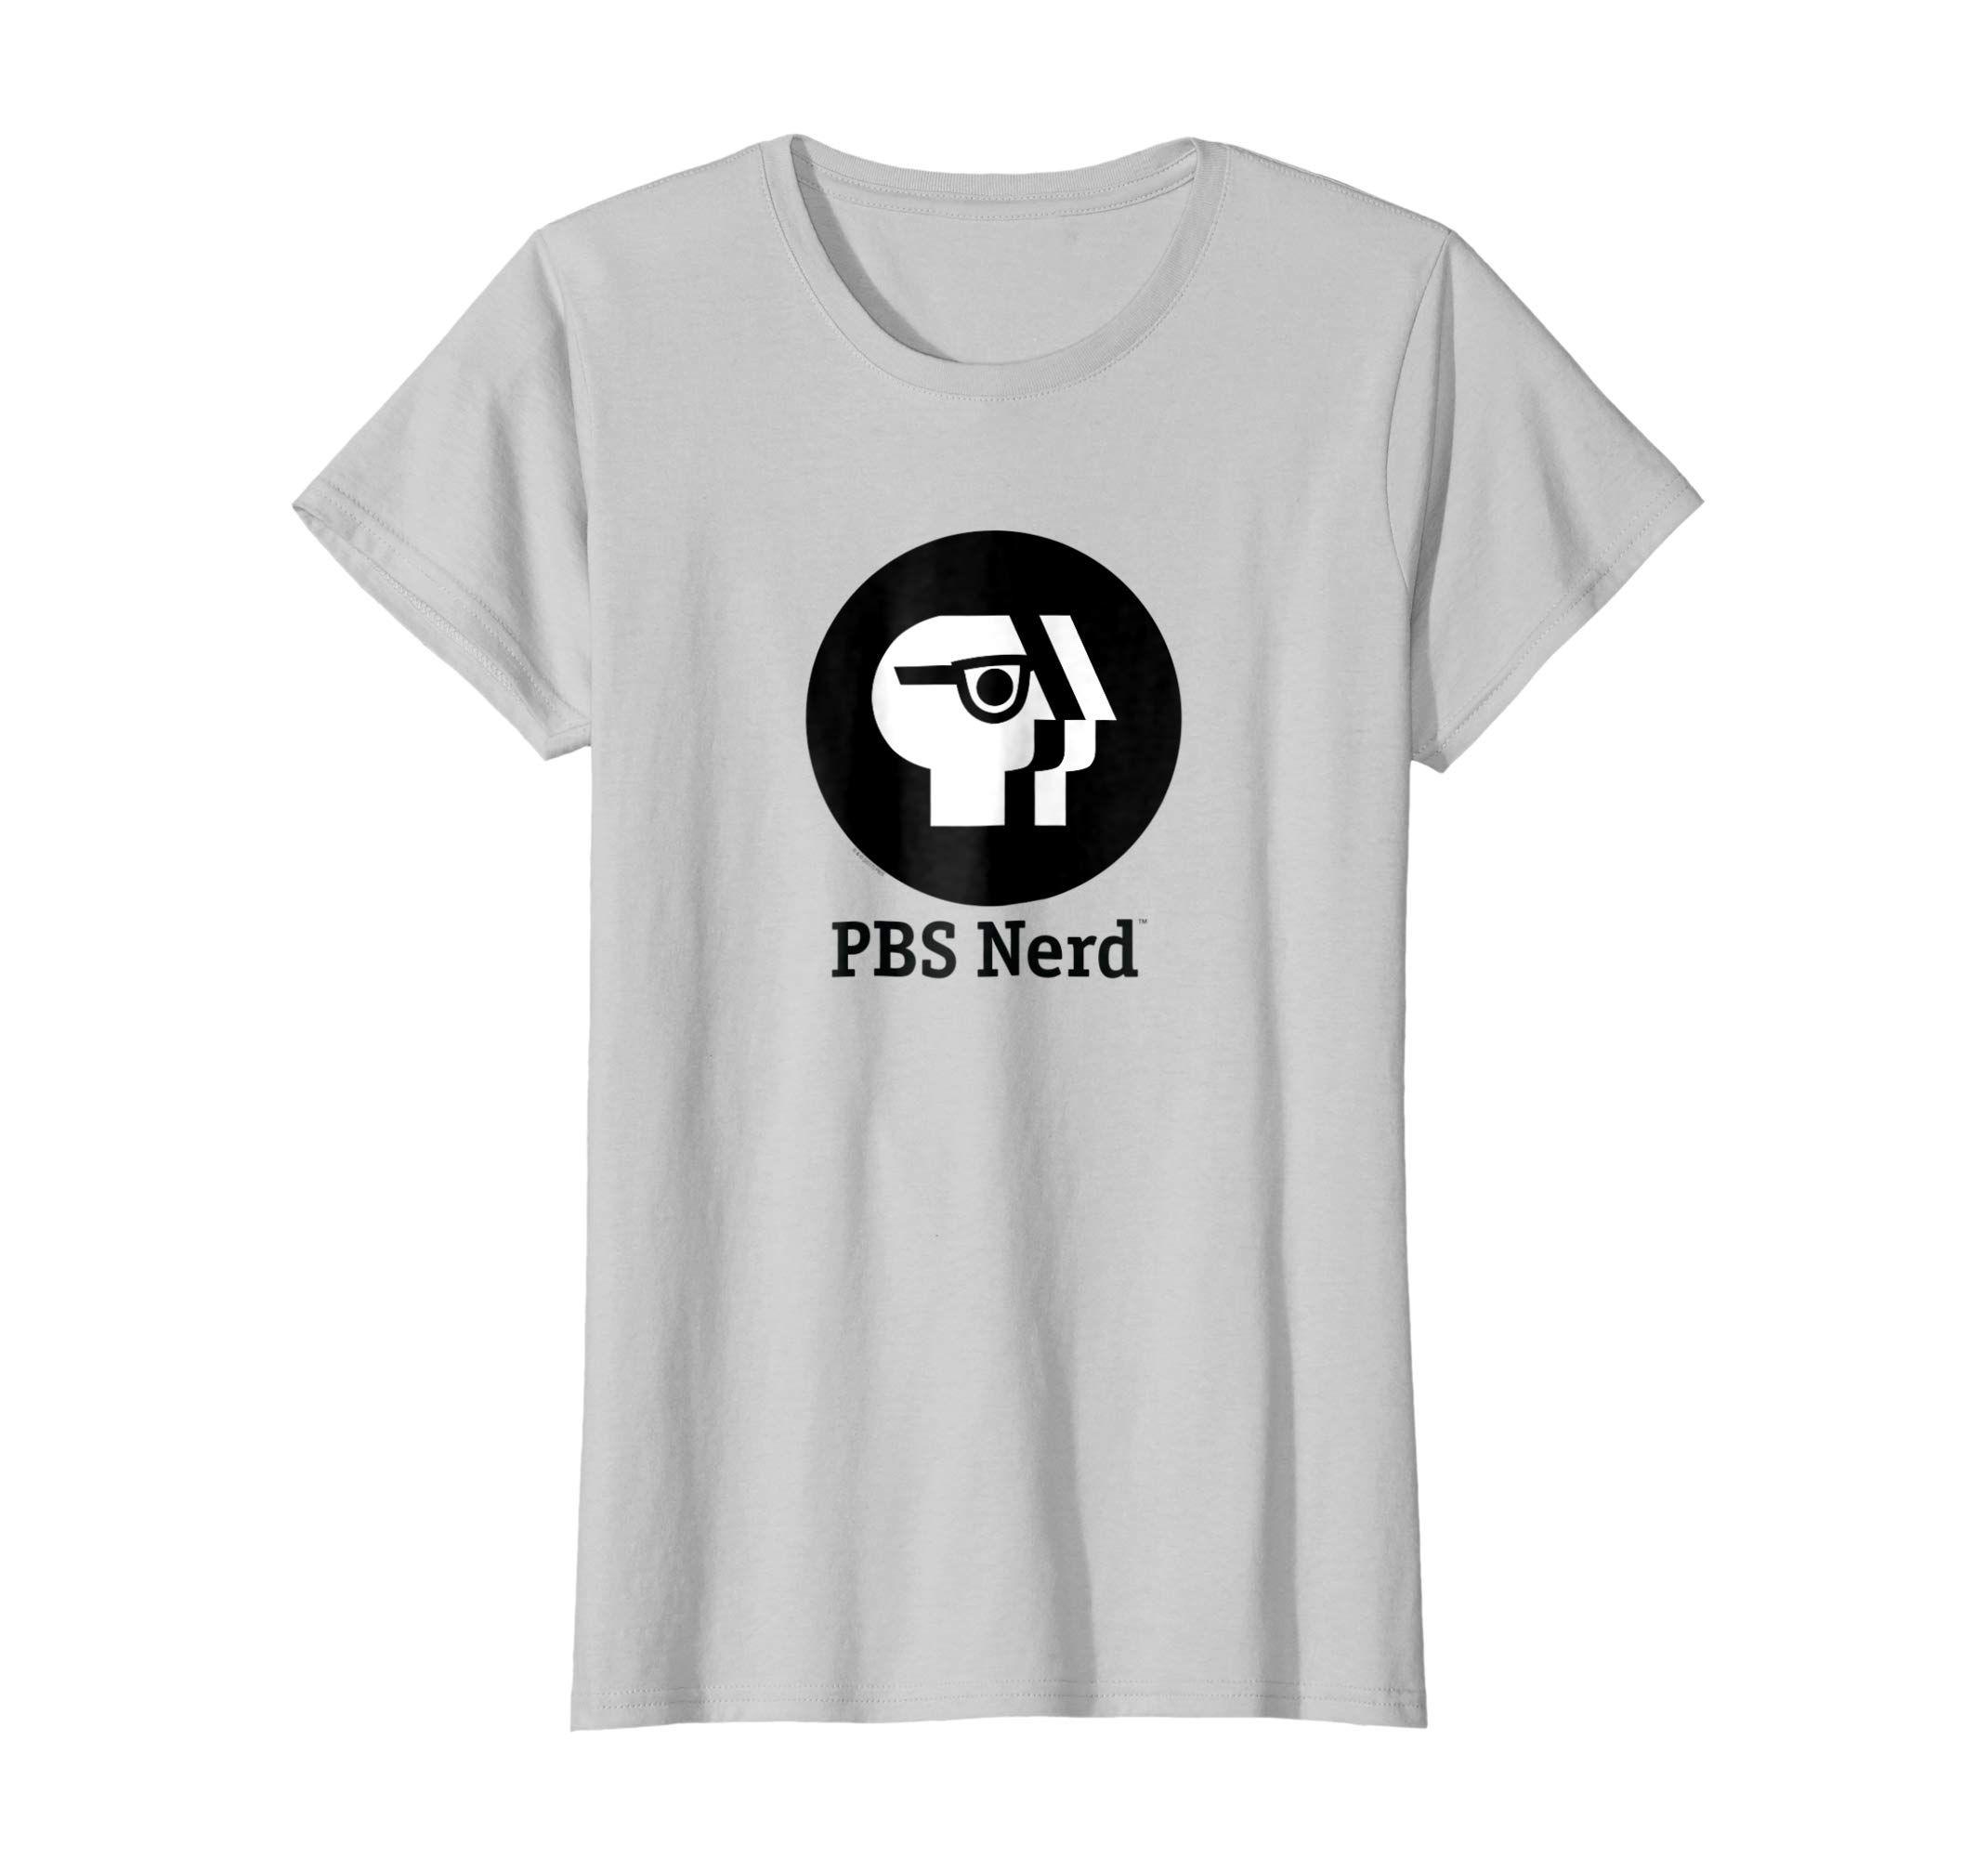 N.E.r.d Logo - Amazon.com: PBS PBS Nerd Logo: Clothing